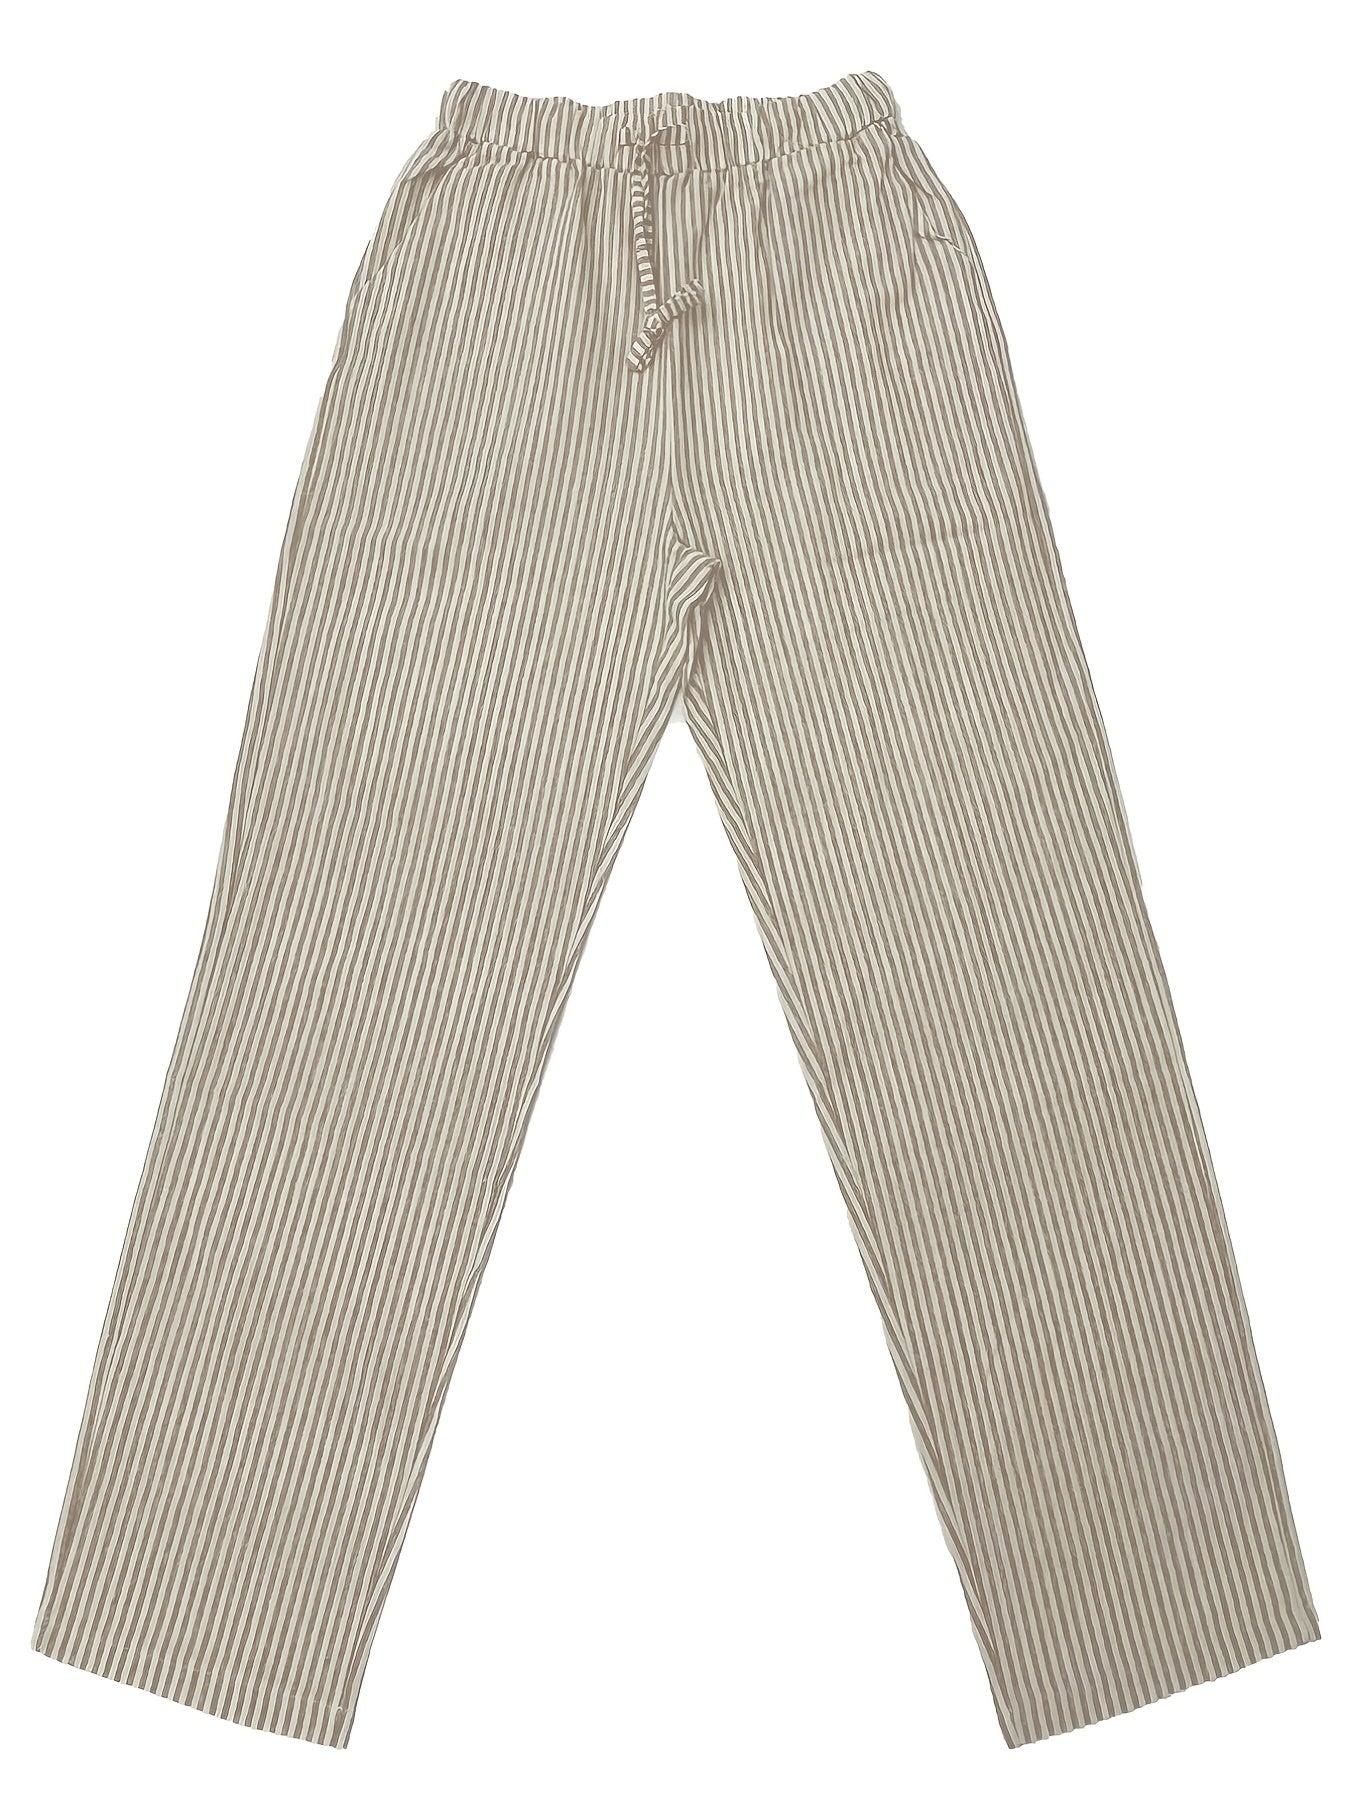 gbolsos  Striped Slant Pocket Drawstring Pants, Casual Pants For Spring & Summer, Women's Clothing